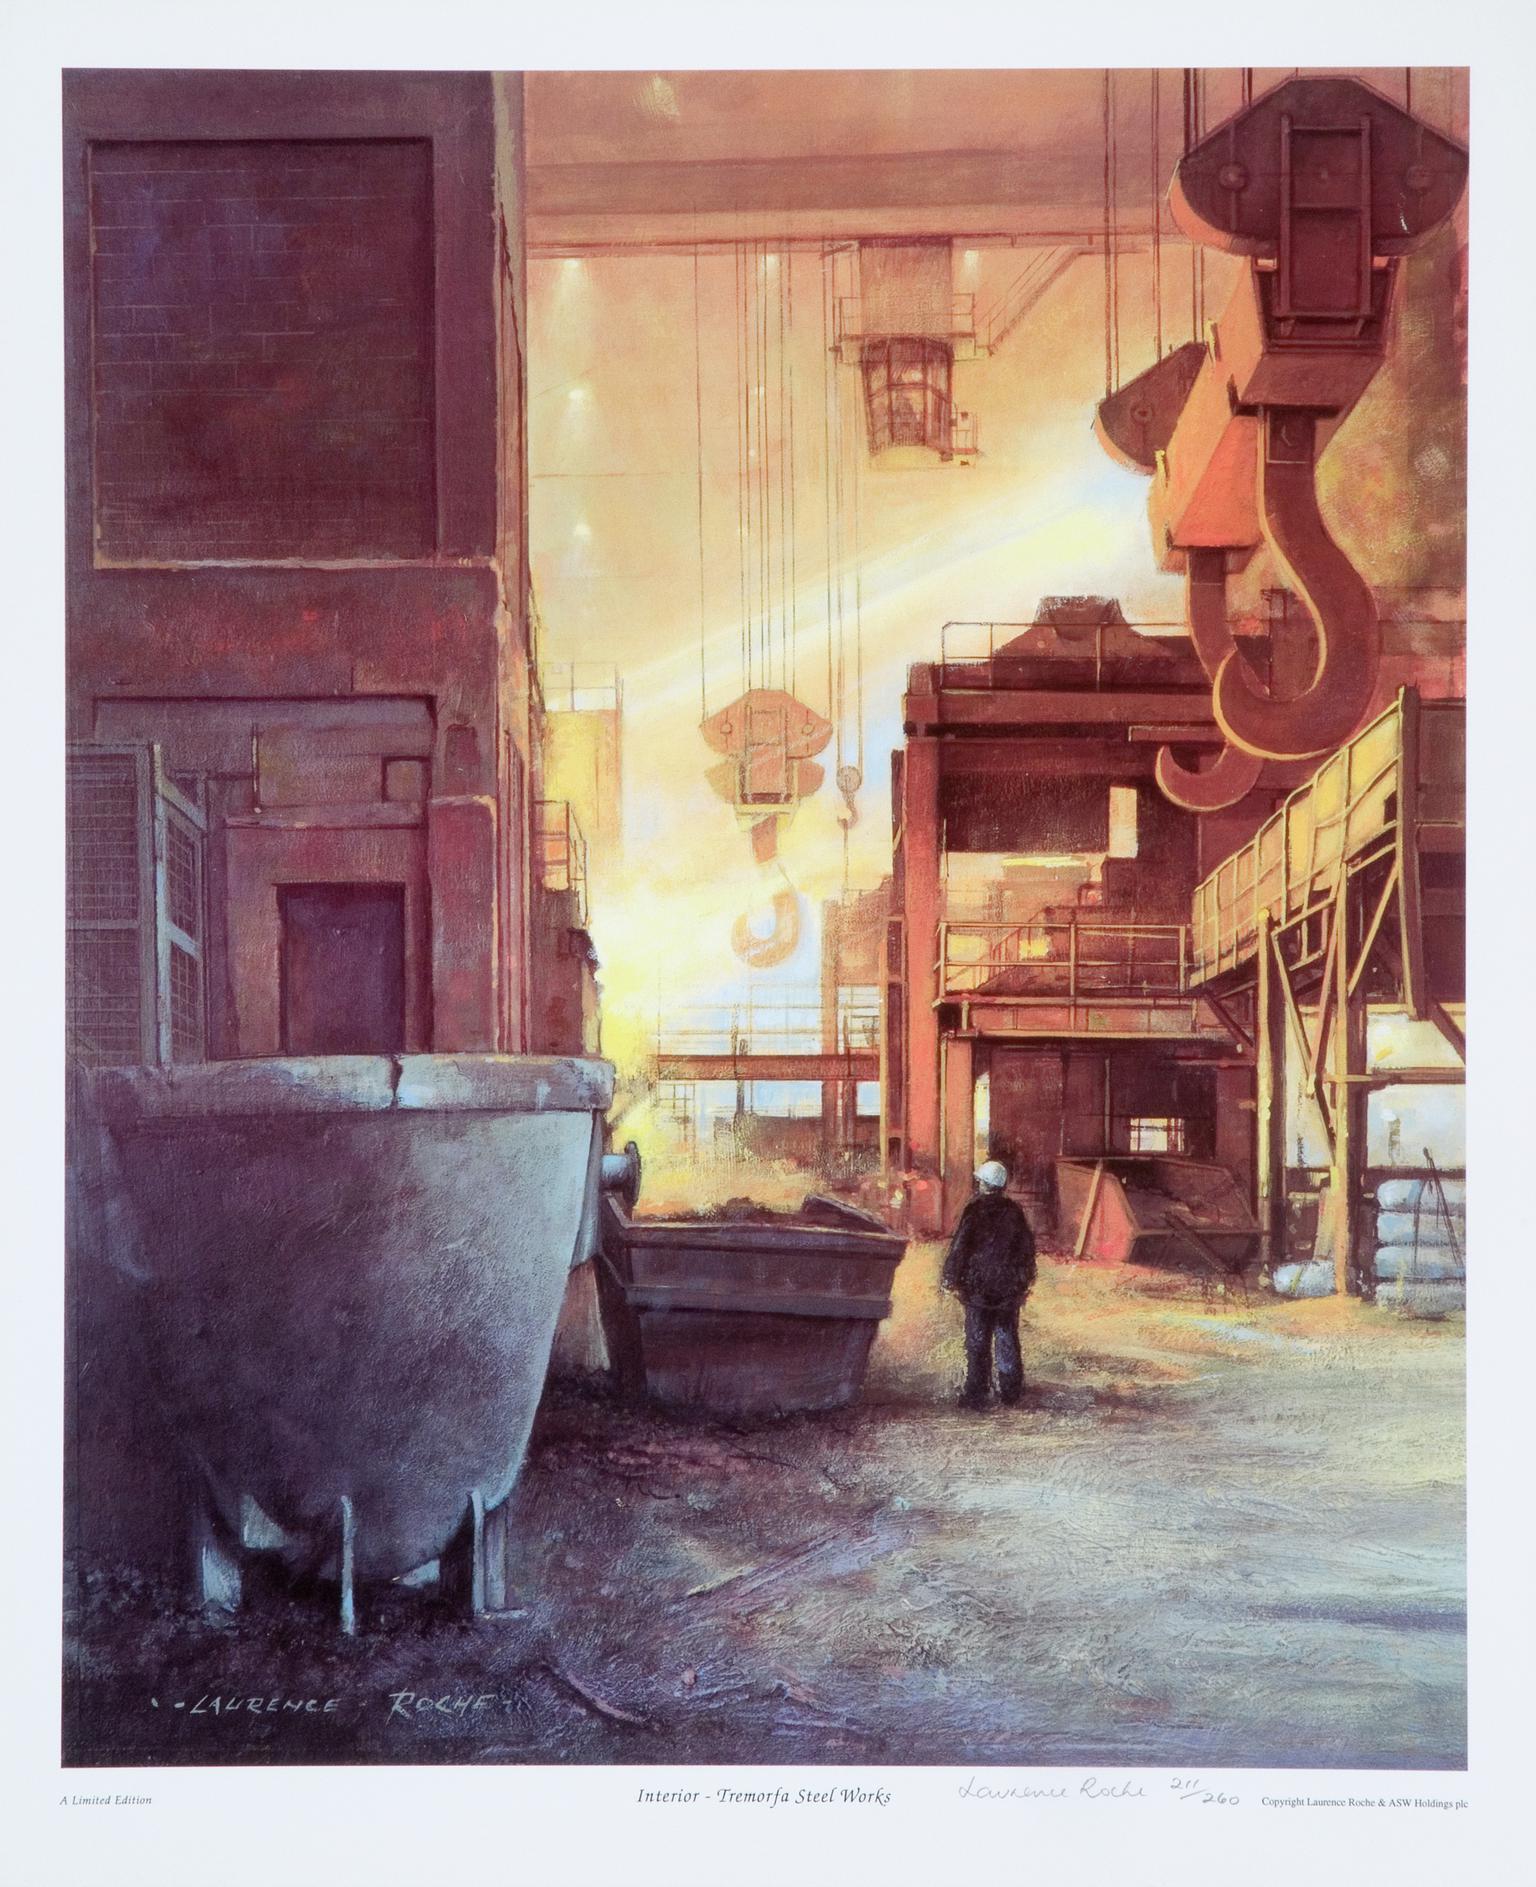 Interior - Tremorfa Steel Works (print)